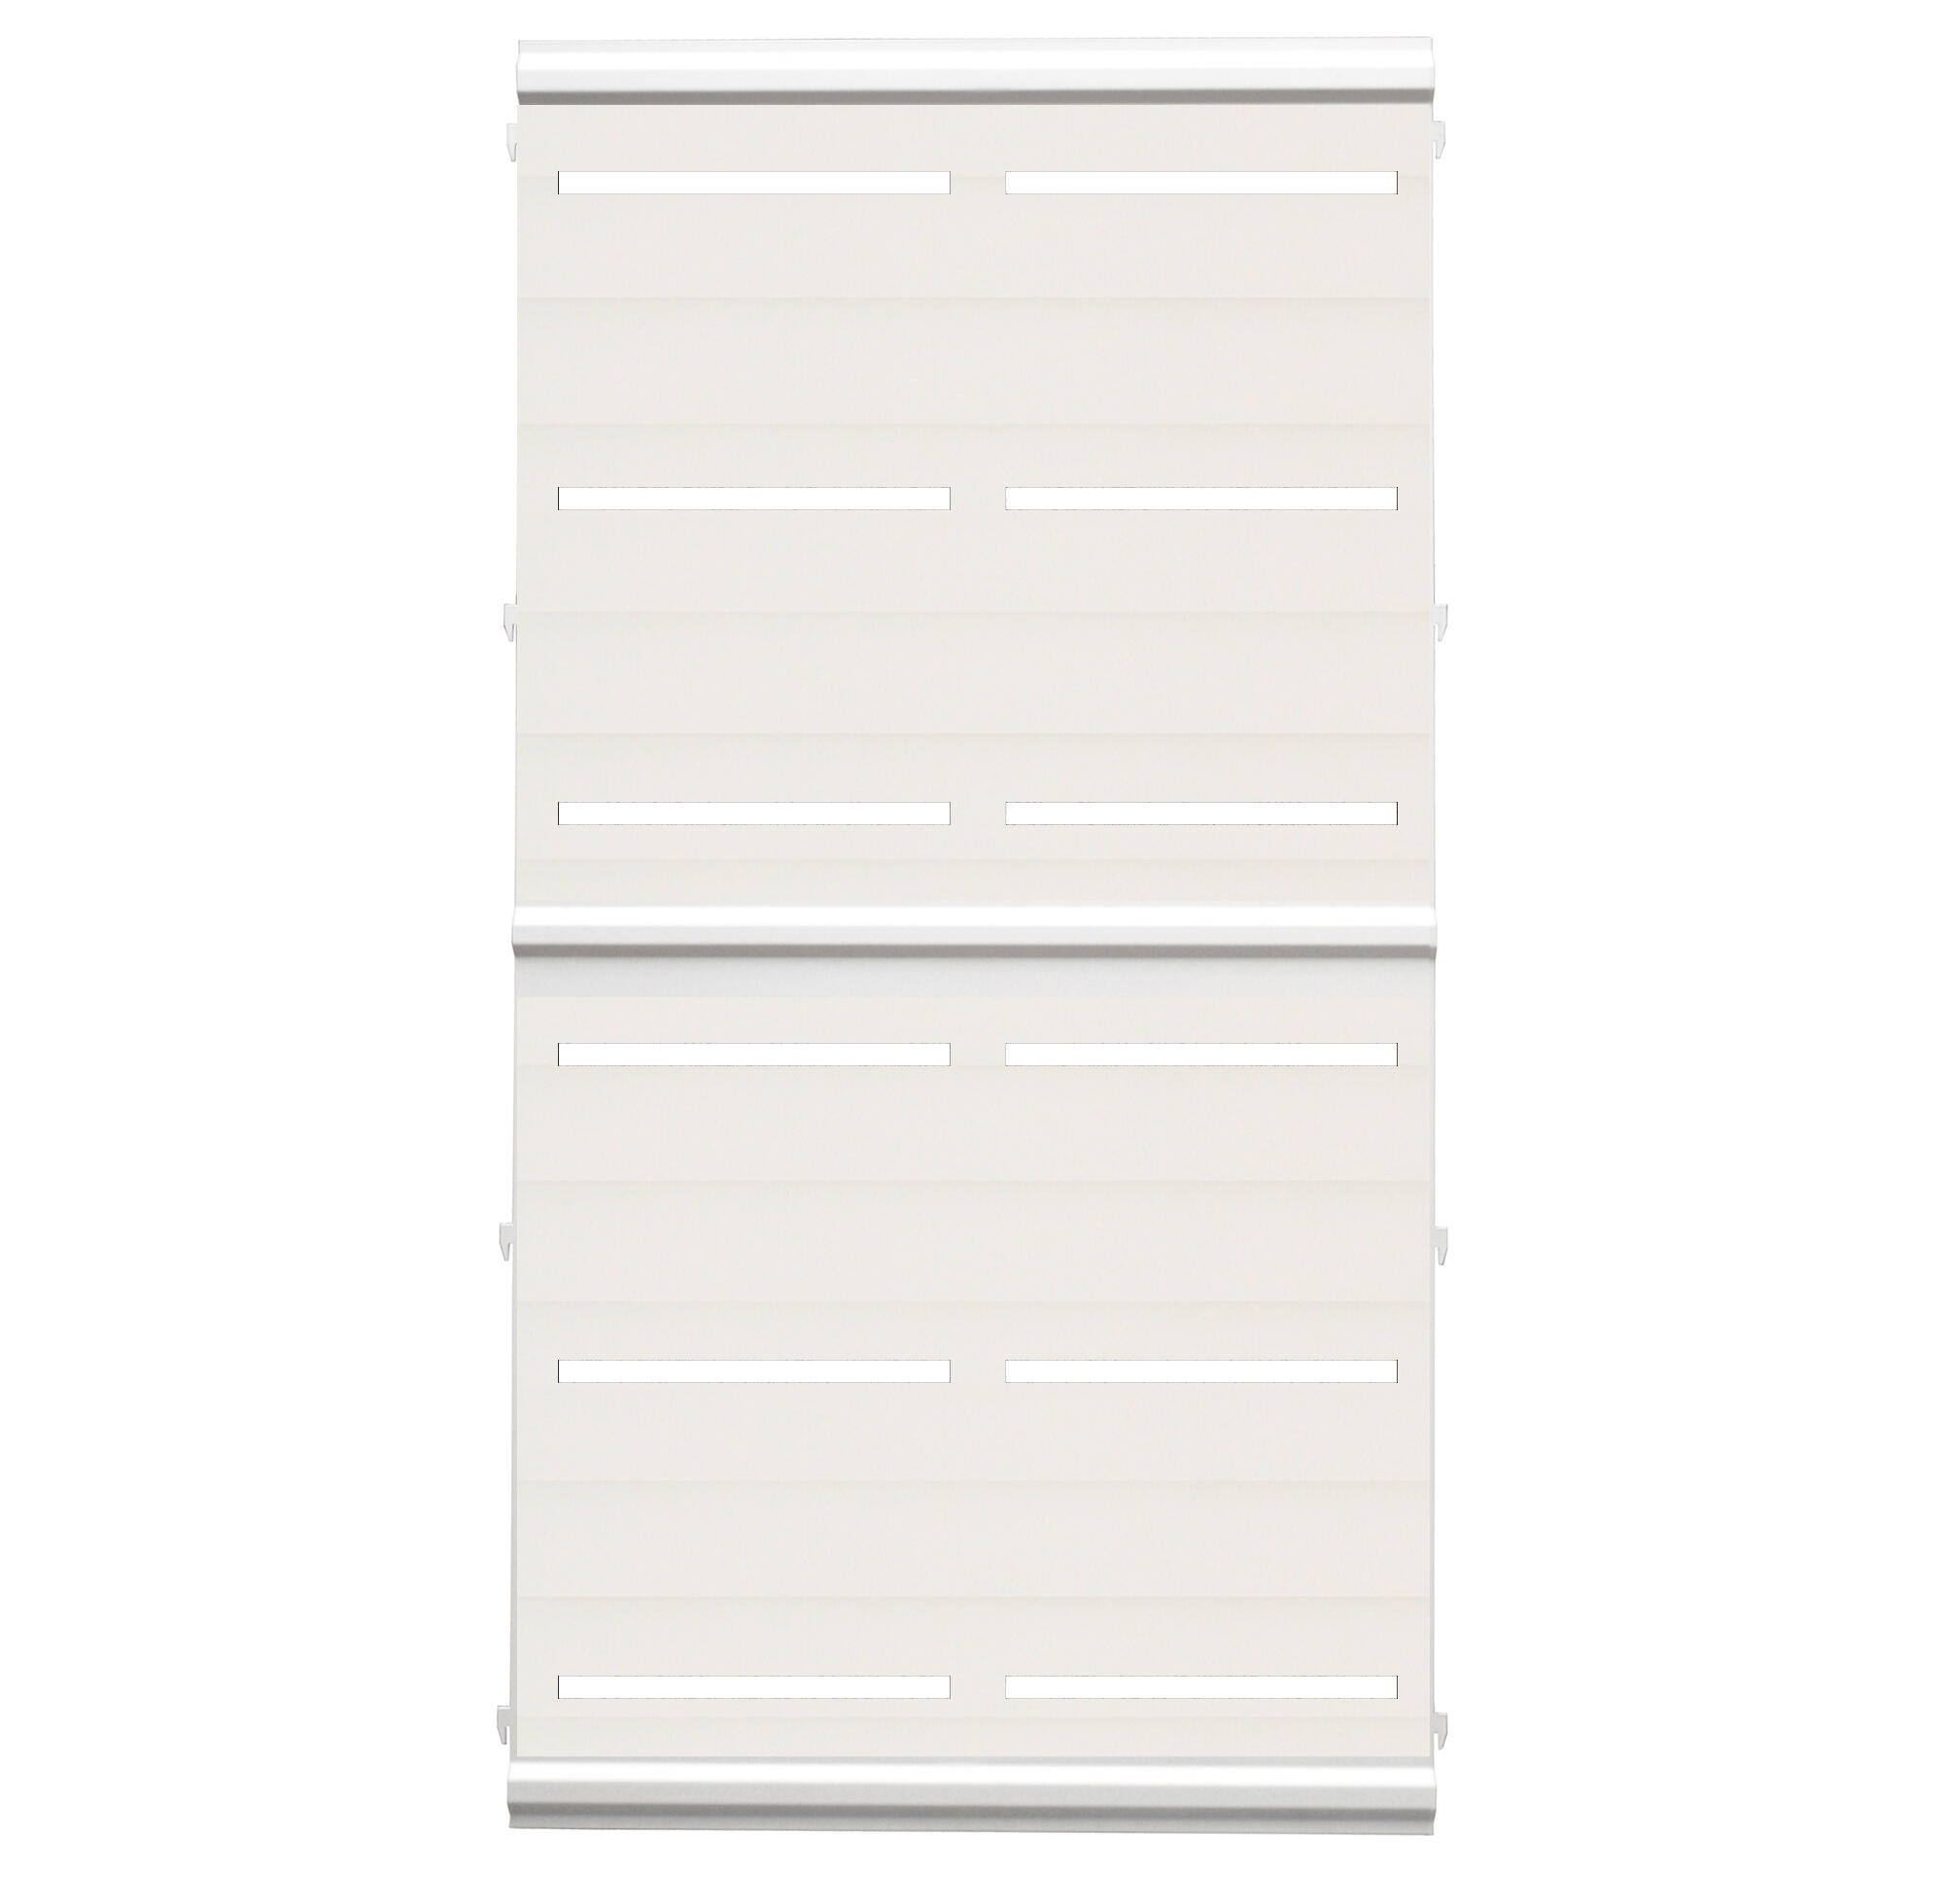 Panel remate valla acero galvanizado franja rayas blanco 144x73,5 cm